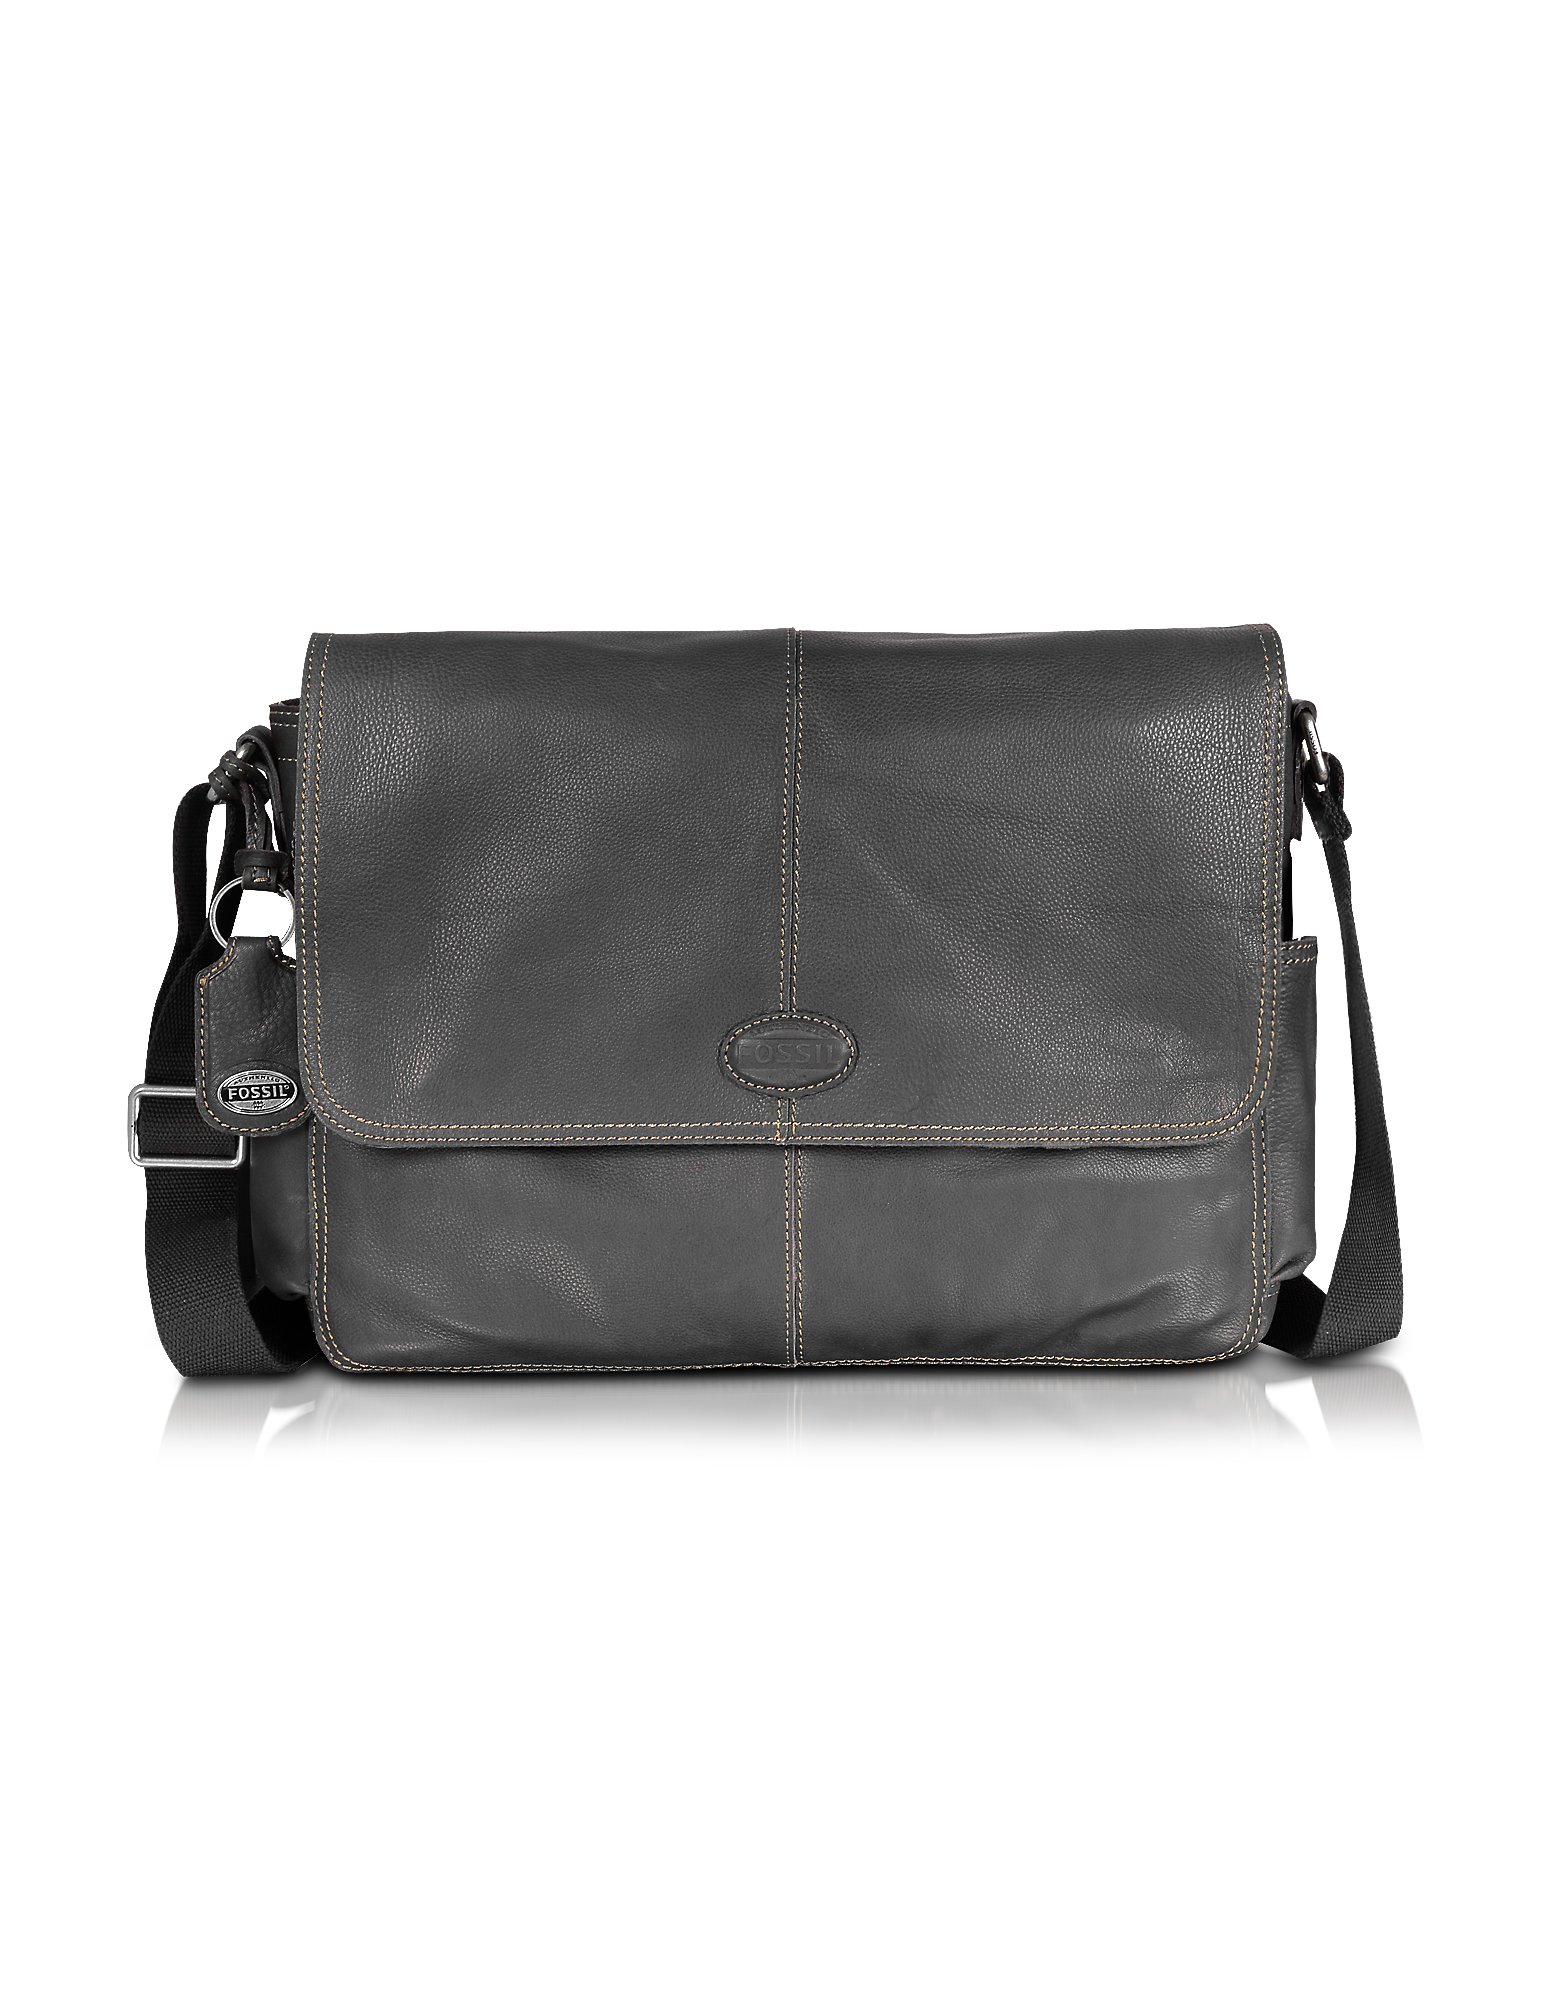 Lyst - Fossil Desperado Ew - Leather Laptop Messenger Bag in Black for Men